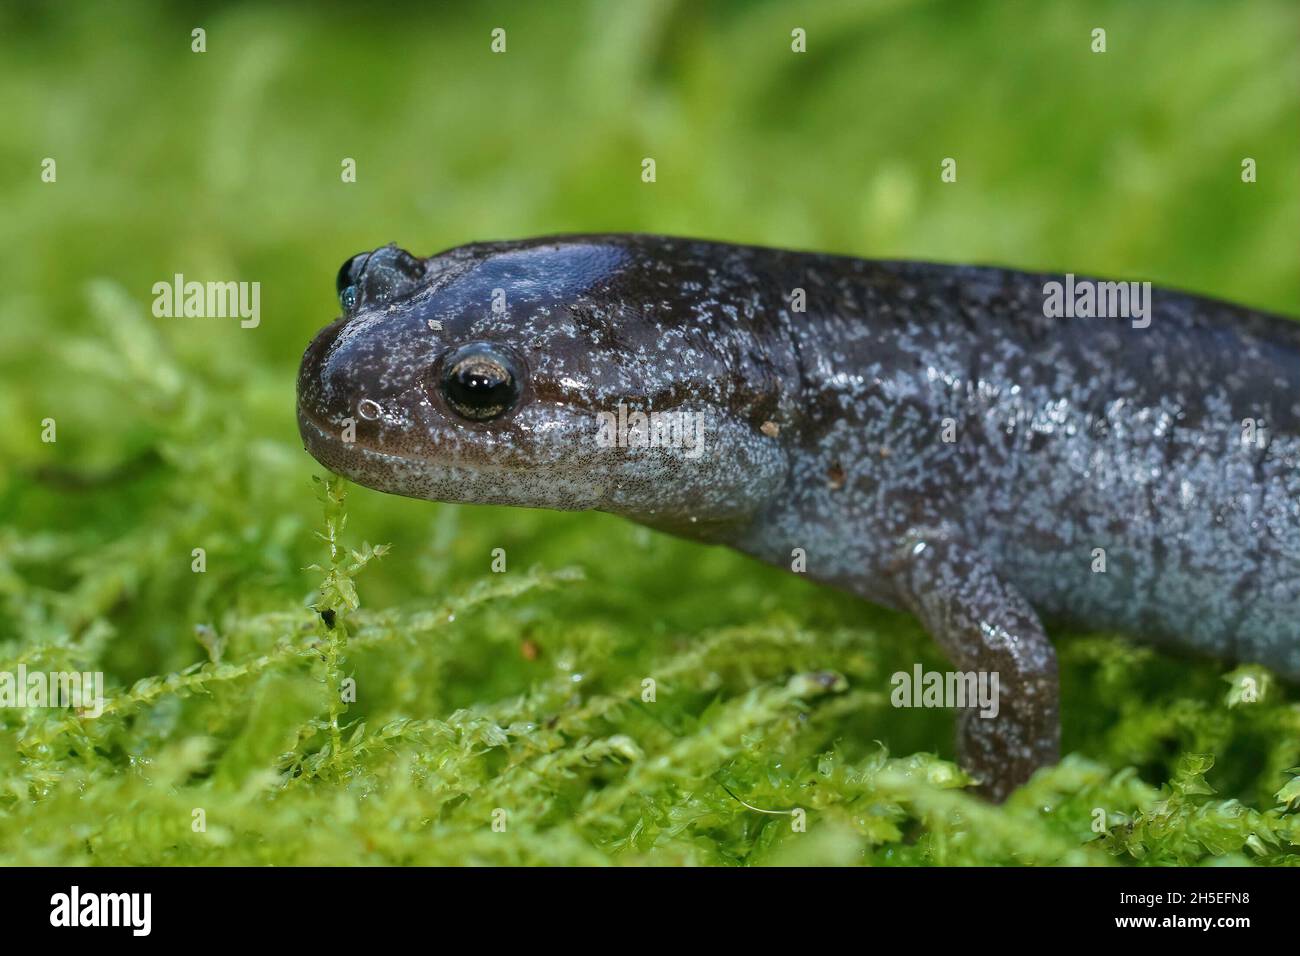 Closeup on the endangered Tokyo salamander, Hynobius tokyoensis Stock Photo